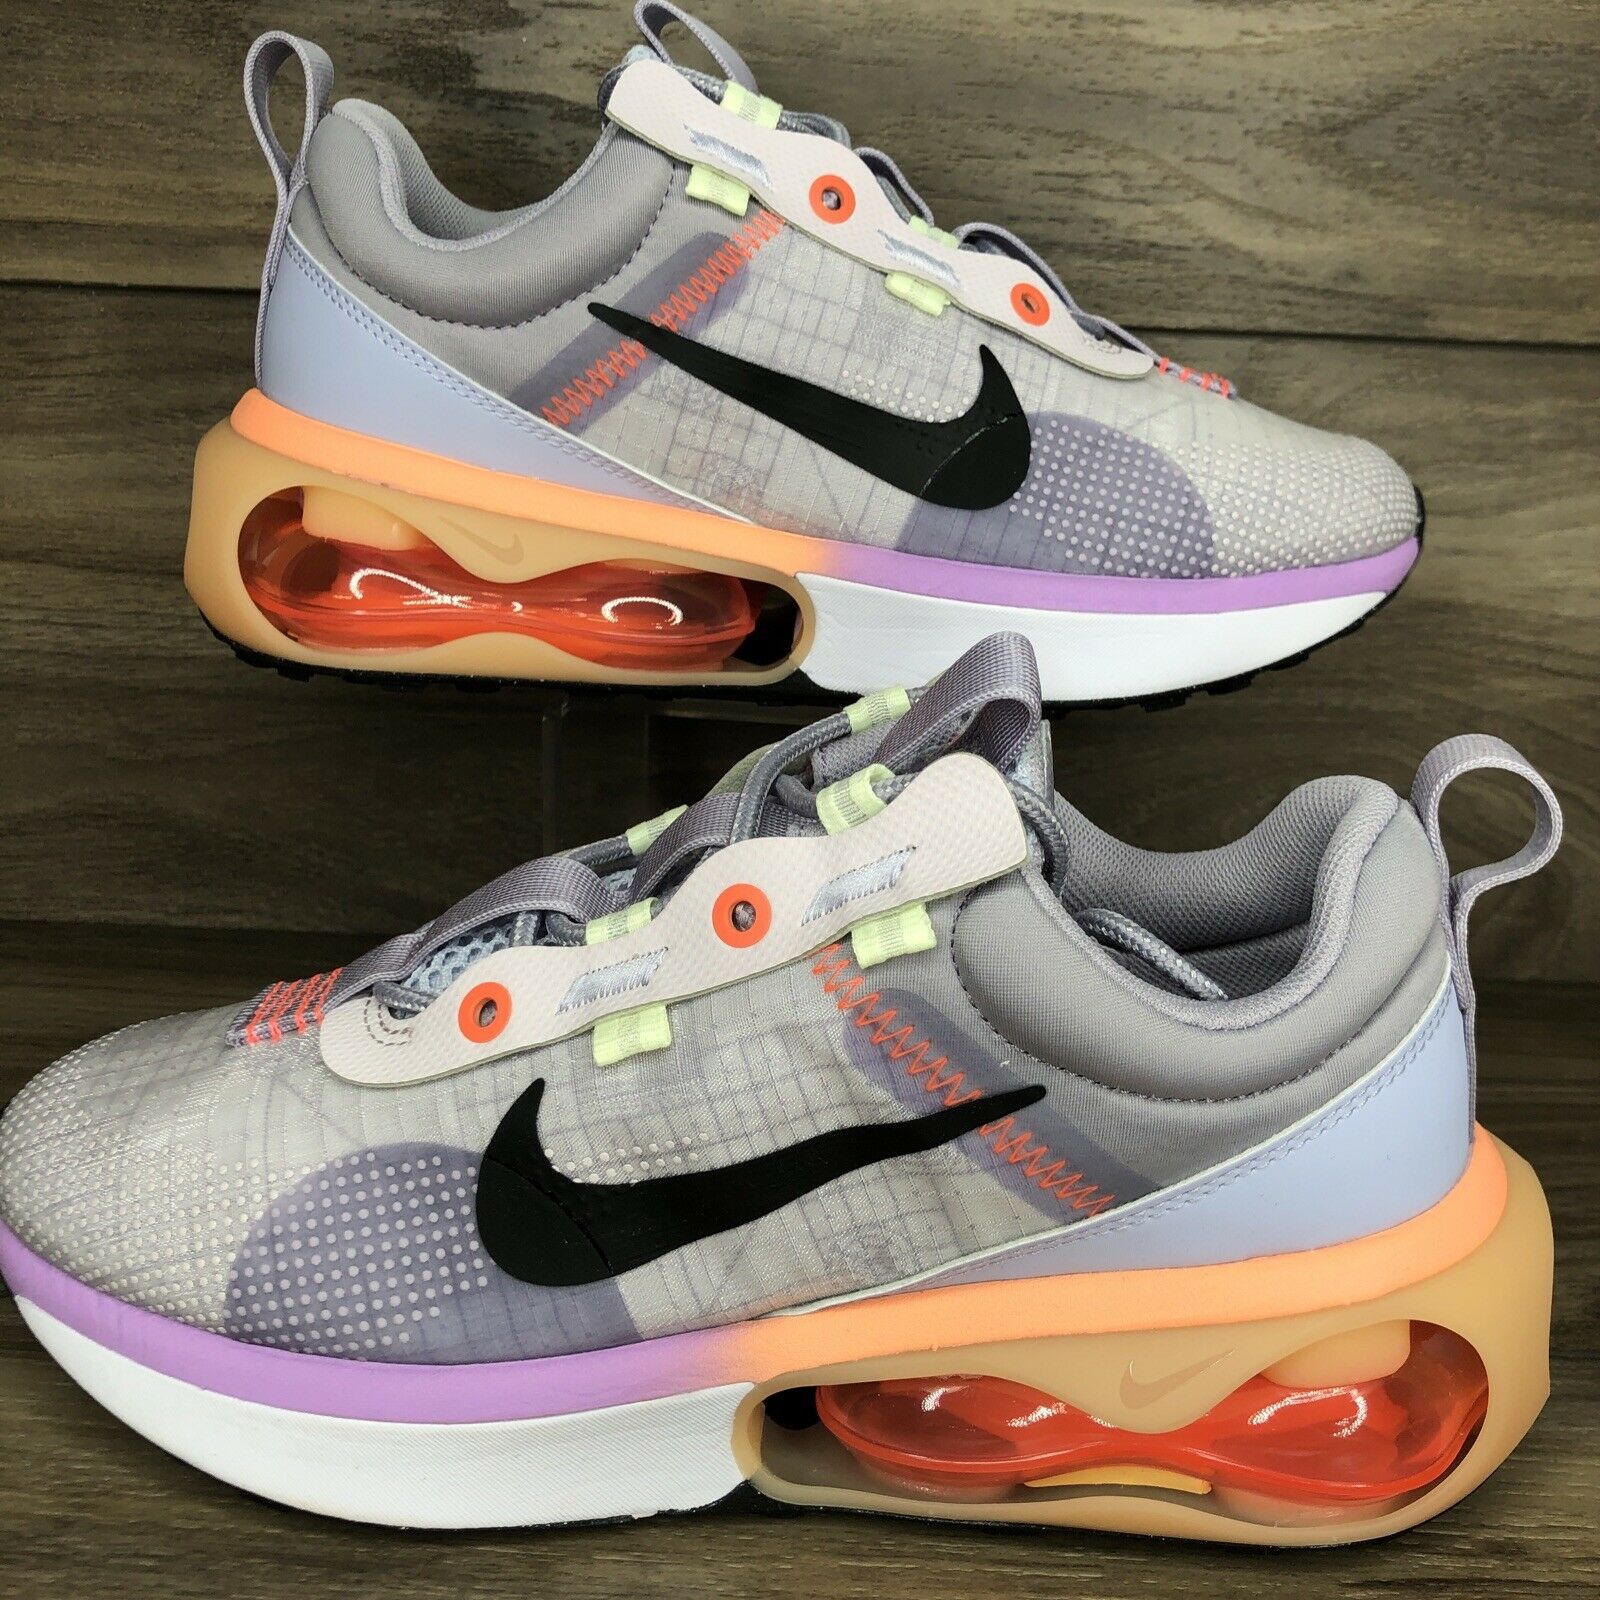 Nike Air Max 2021 "Venice" Running Shoes (DA1923 500) Women’s Size 7.5